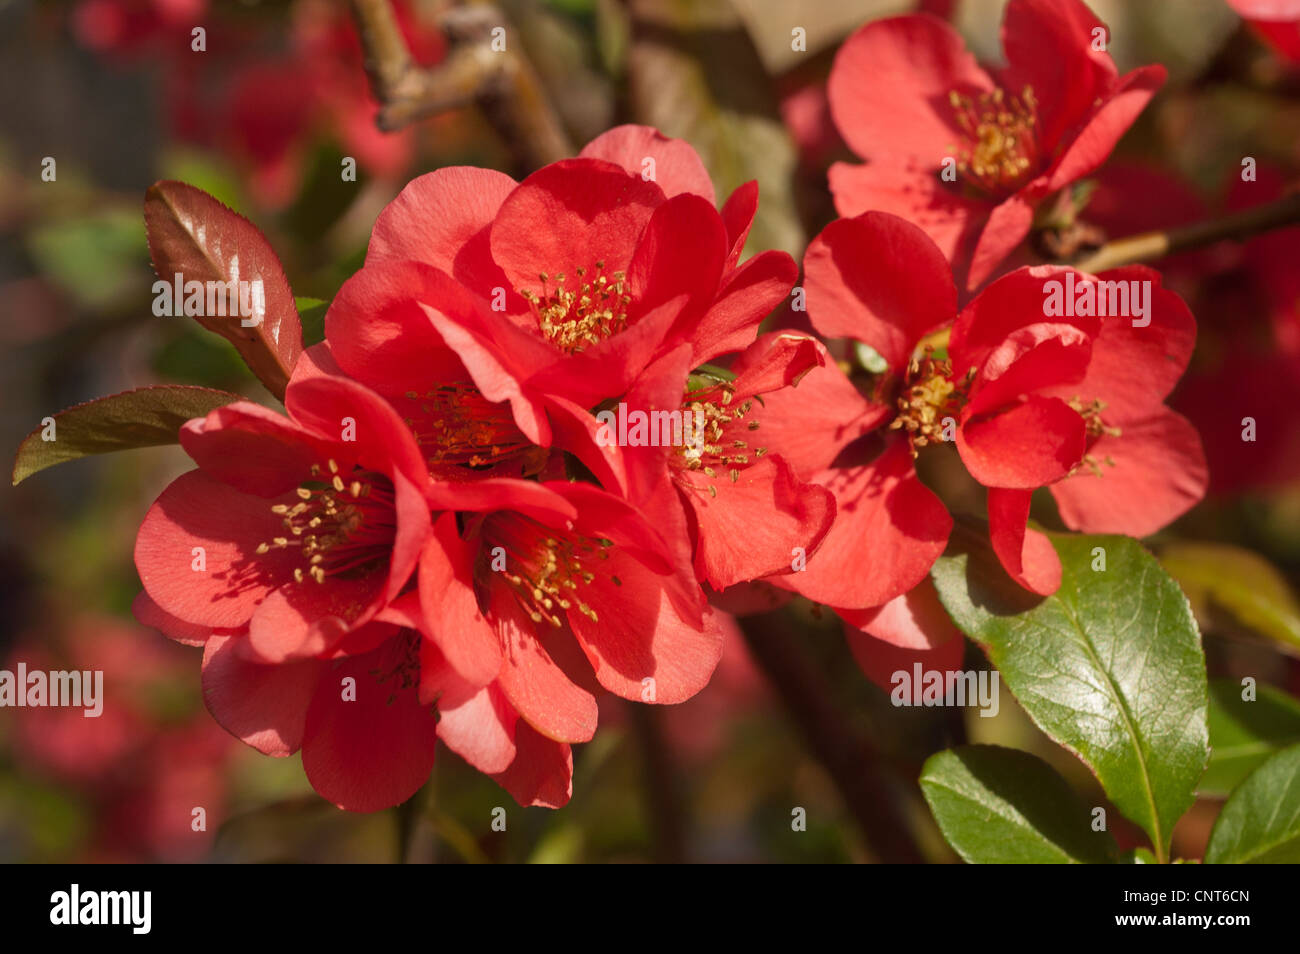 Red flowers of Chaenomeles x Superba shrub, Rosaceae Stock Photo